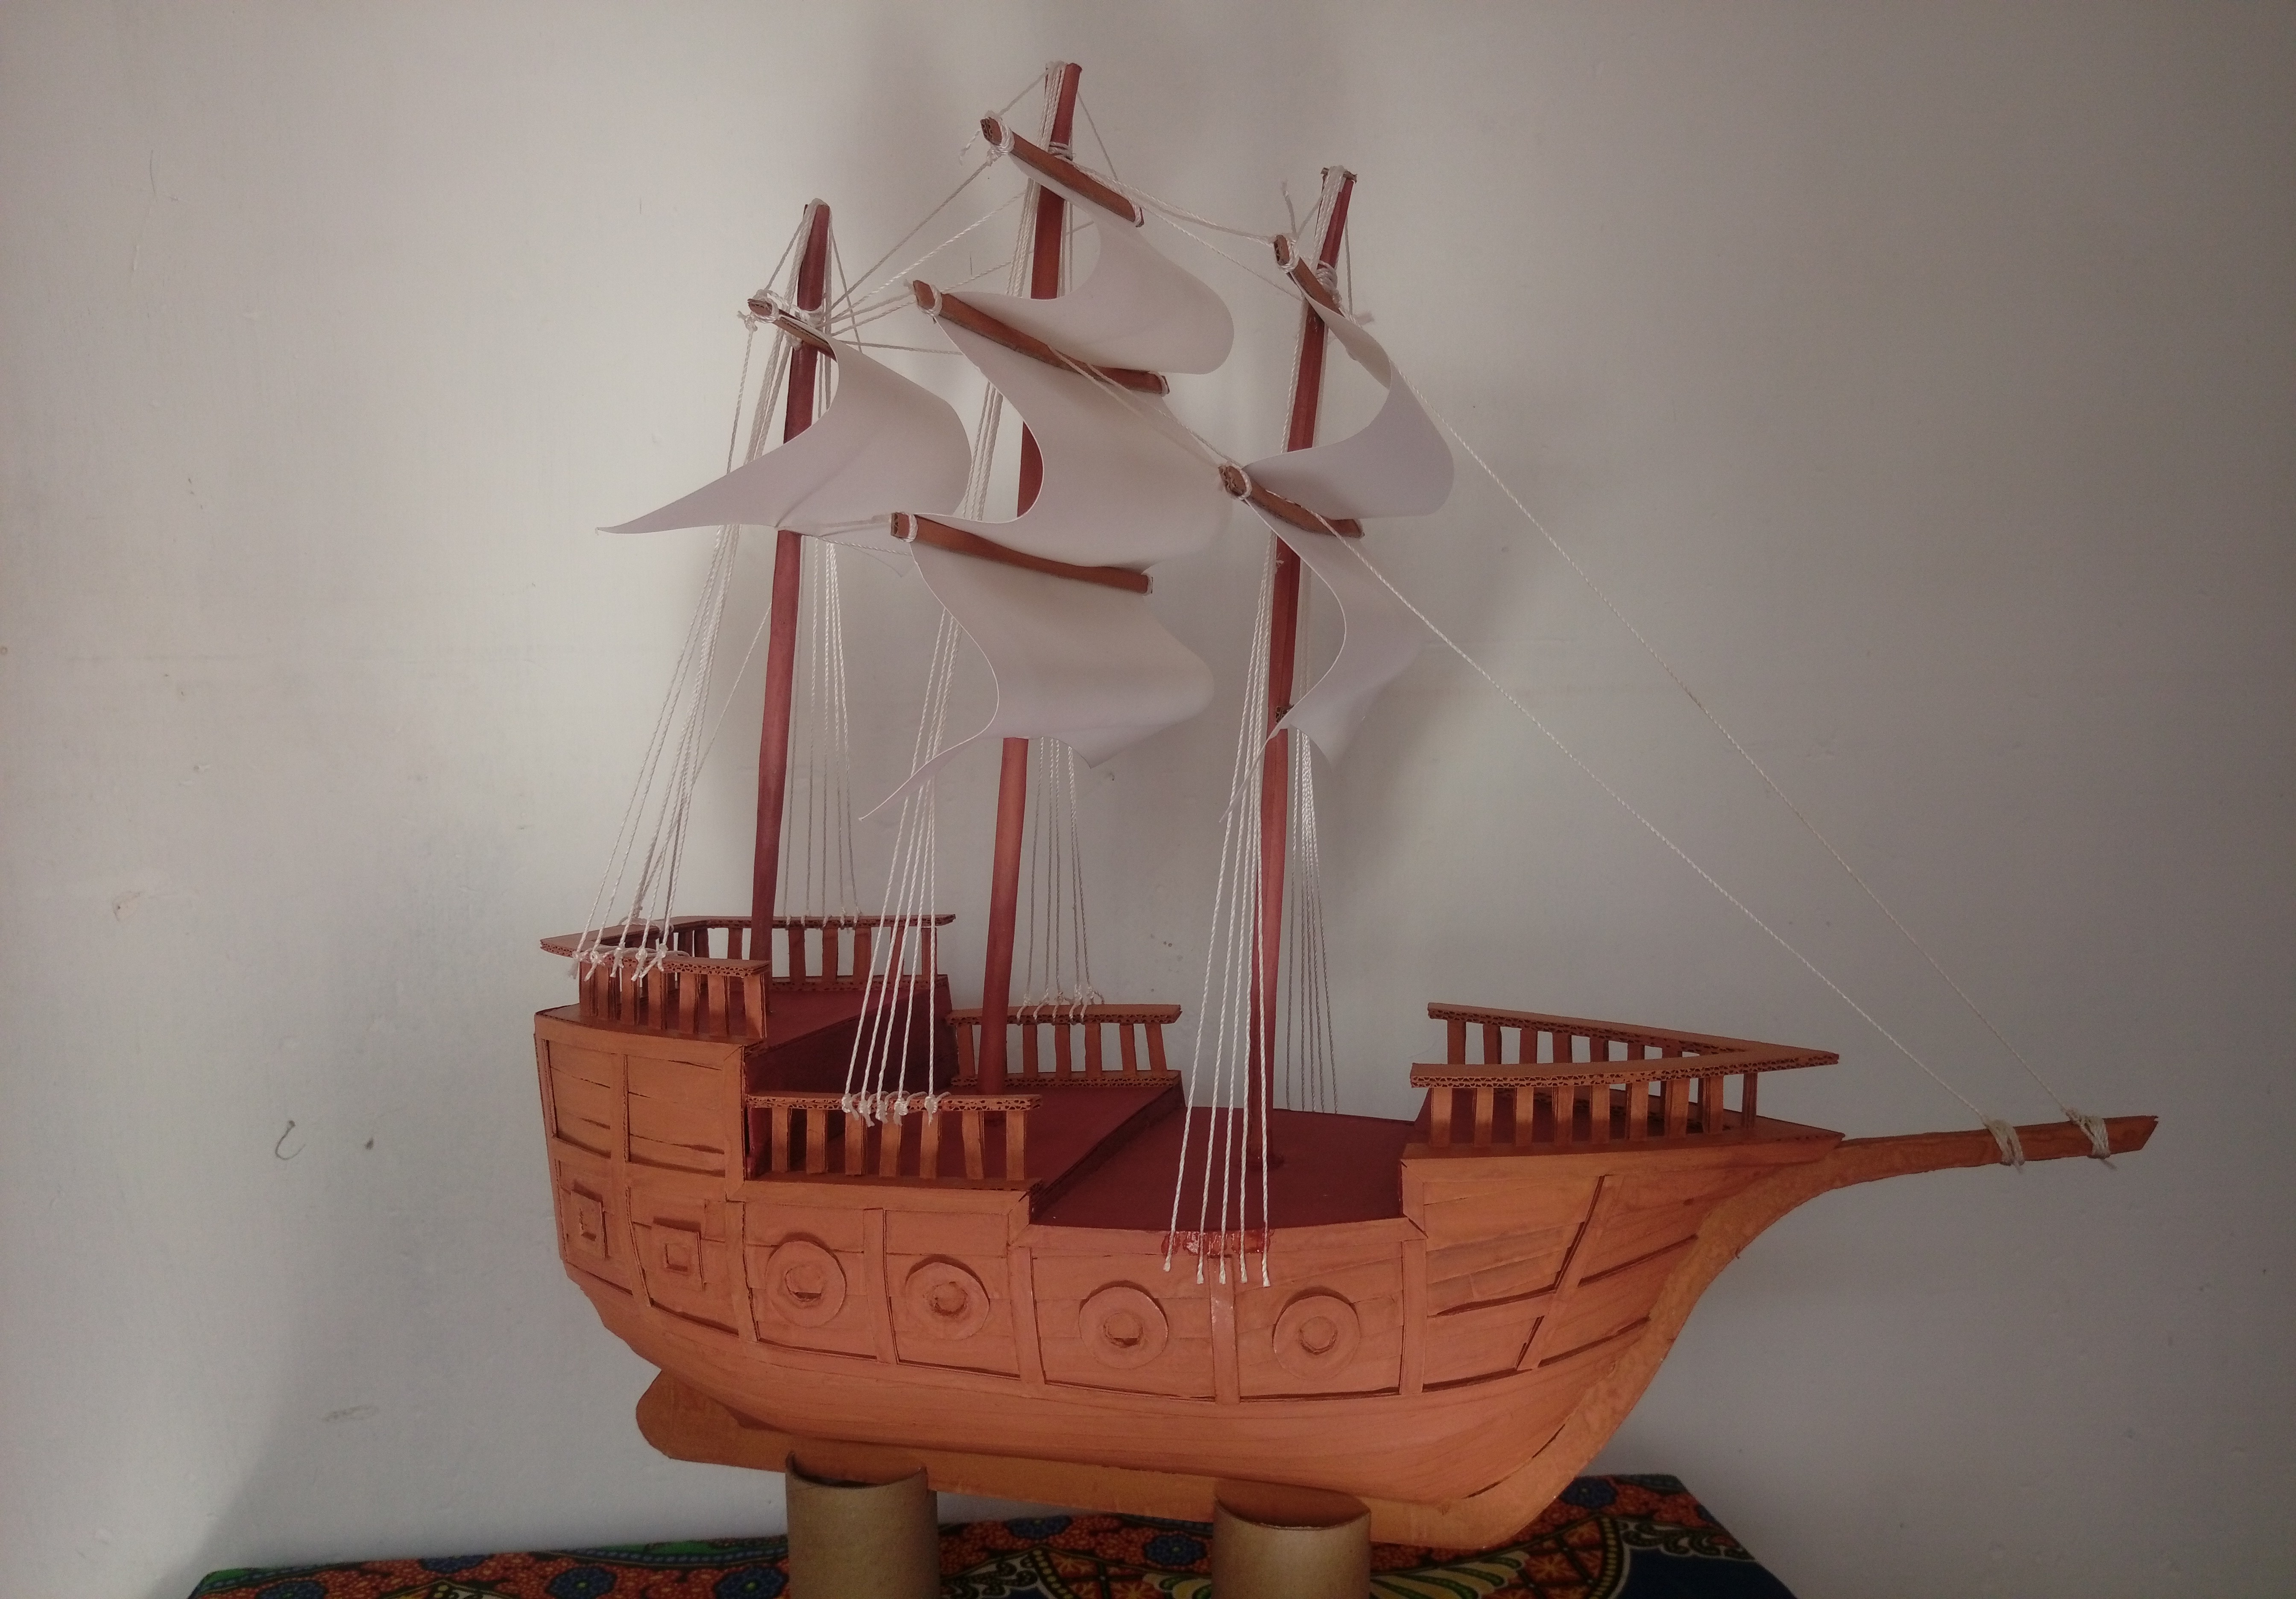 Pirate Ship by Mawli Wijesinghe